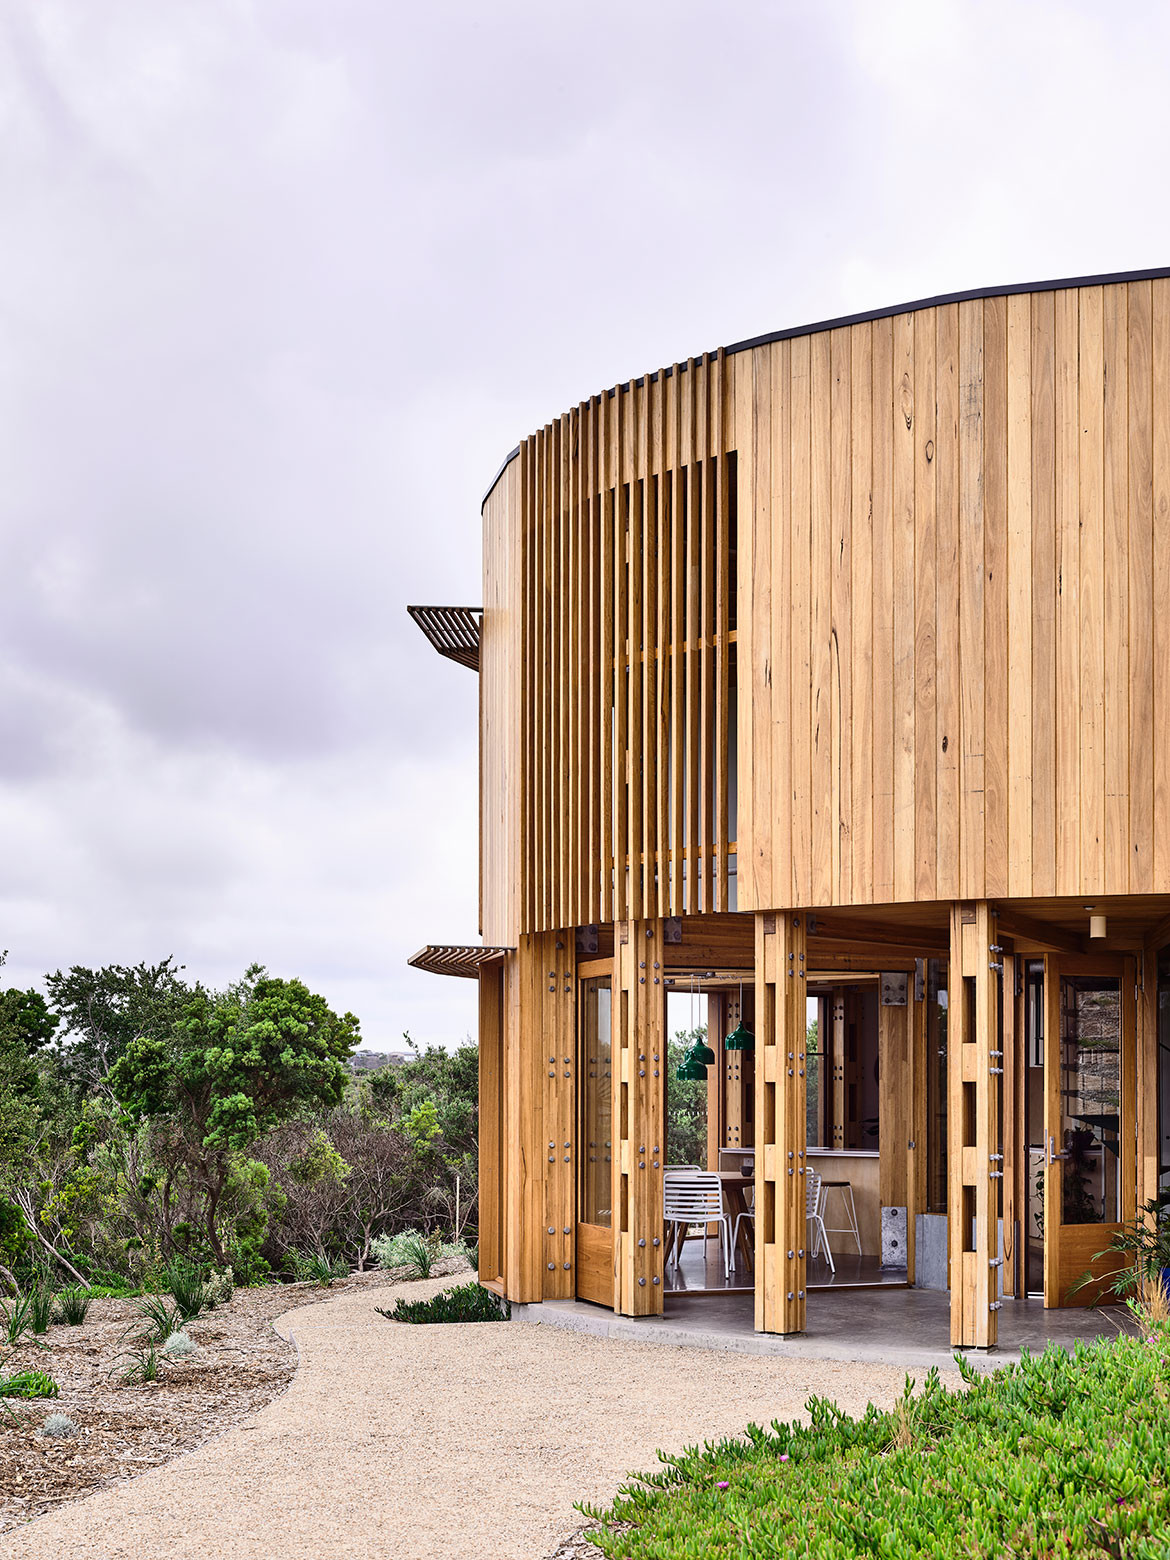 St Andrews Beach House (Melbourne) by Austin Maynard Architects cc Derek Swalwell | Habitus House of the Year 2019